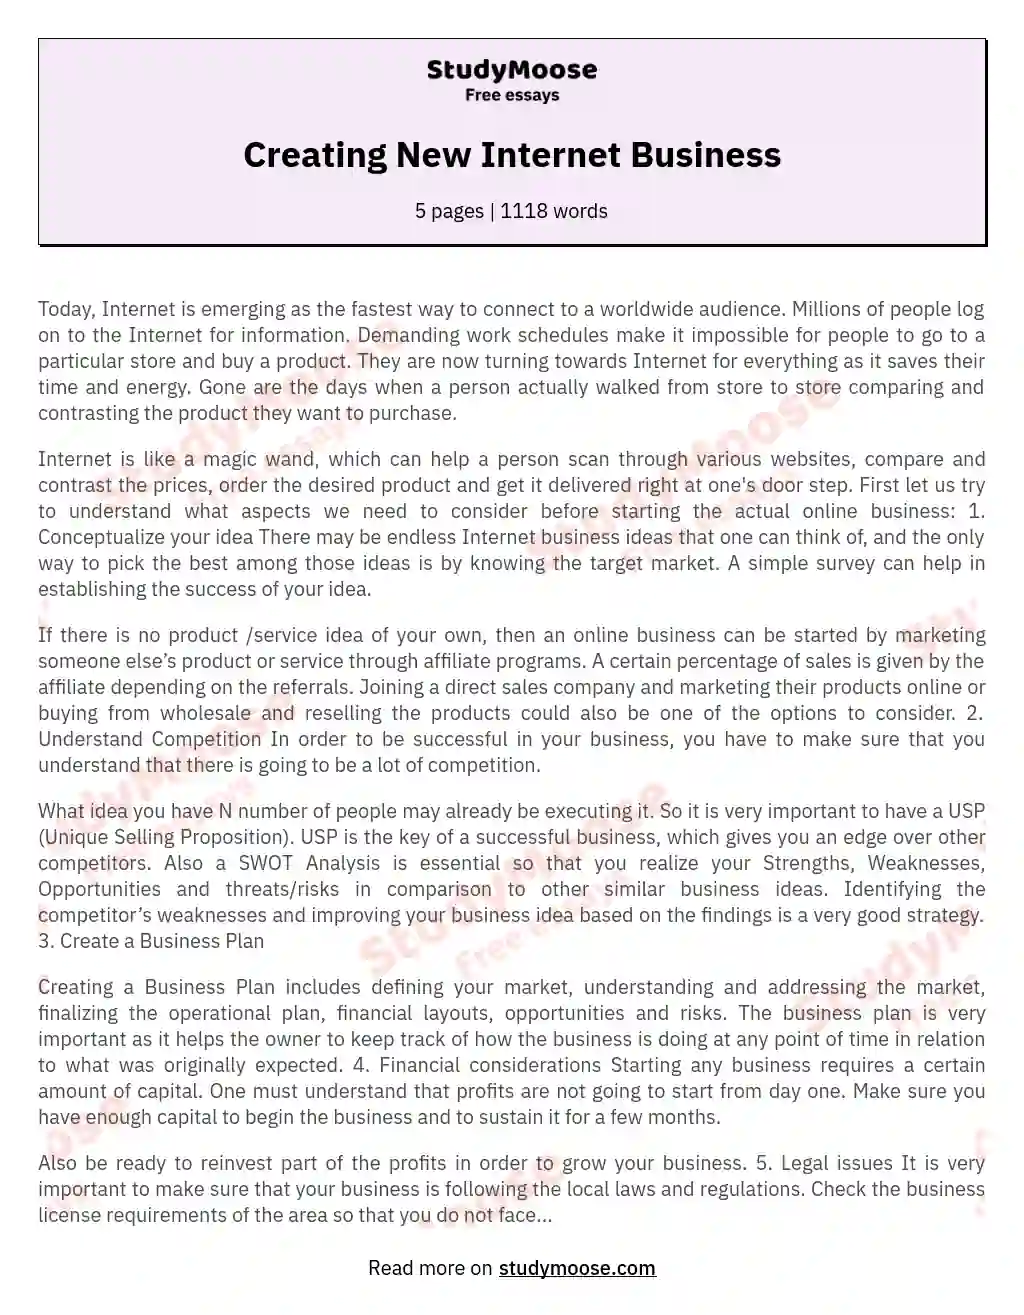 Creating New Internet Business essay